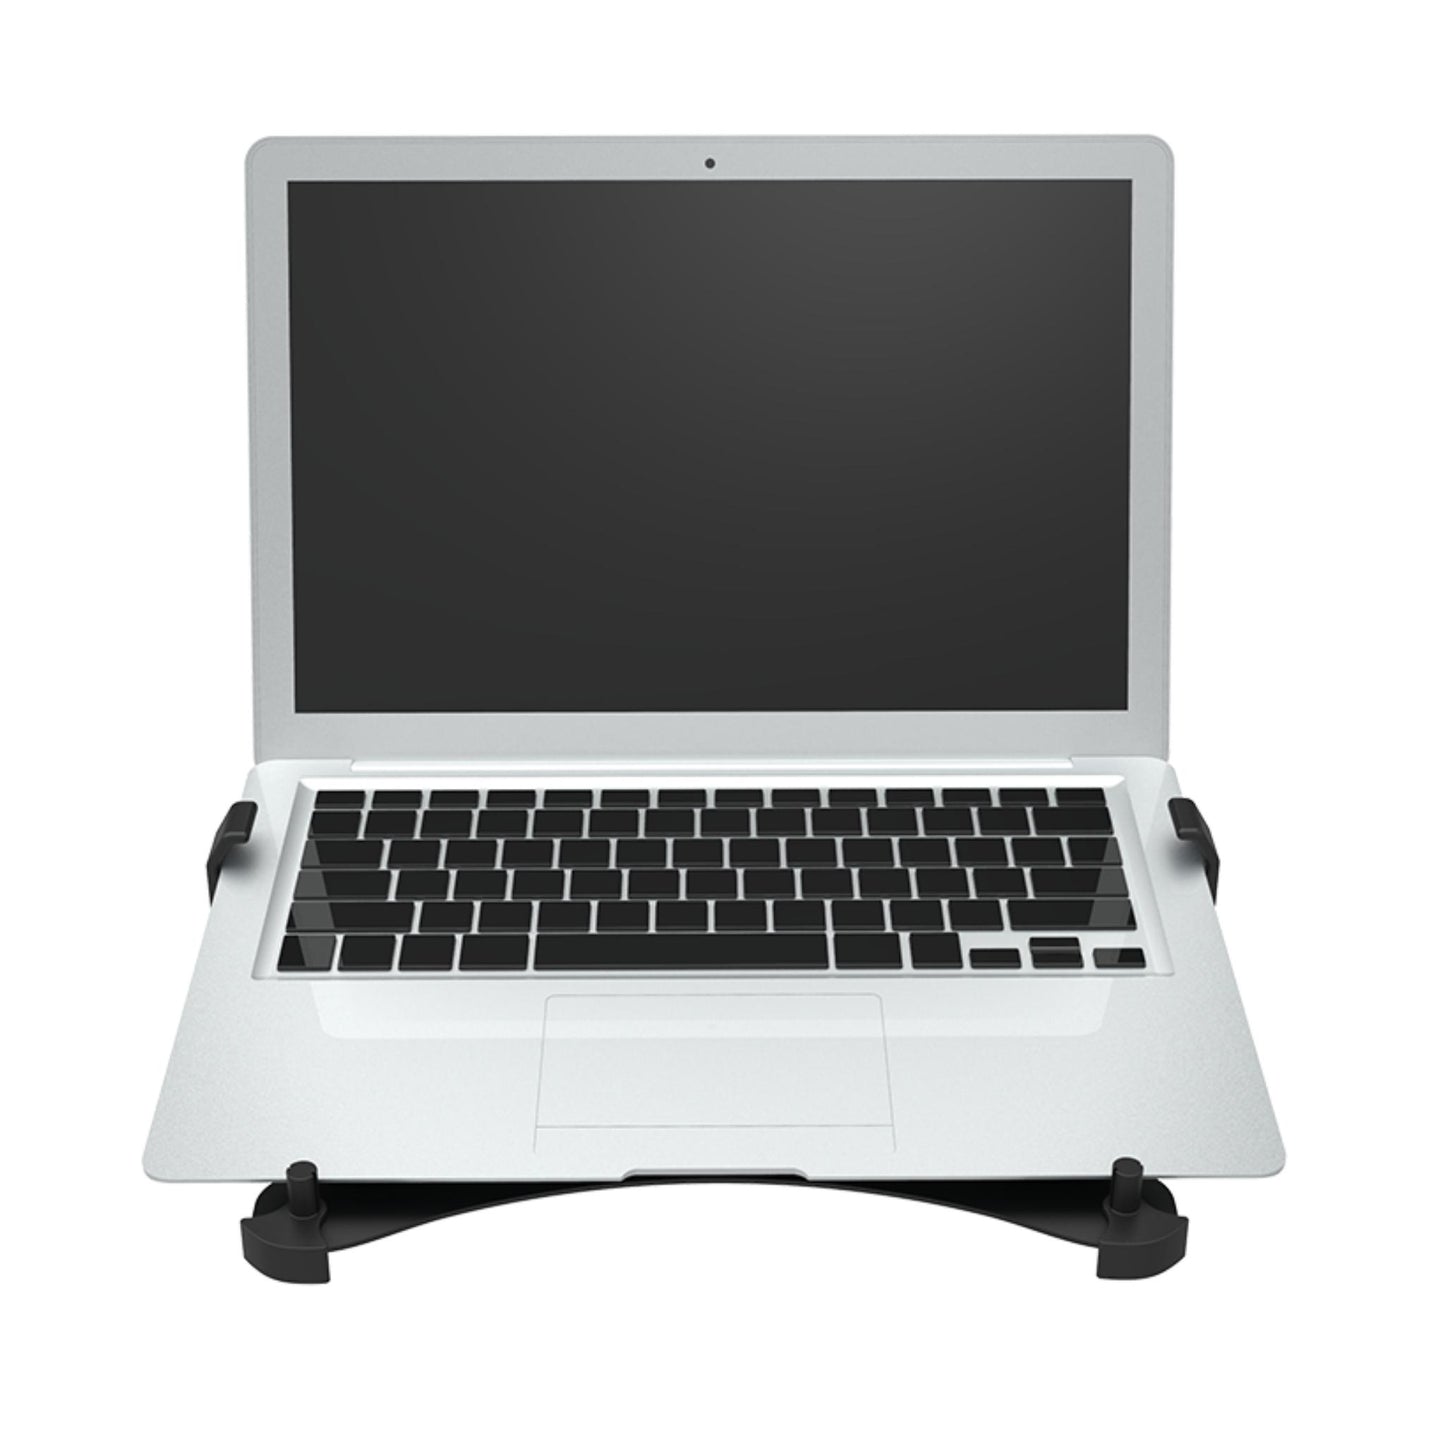 Laptop Mount Monitor Arm Attachment - Black 5